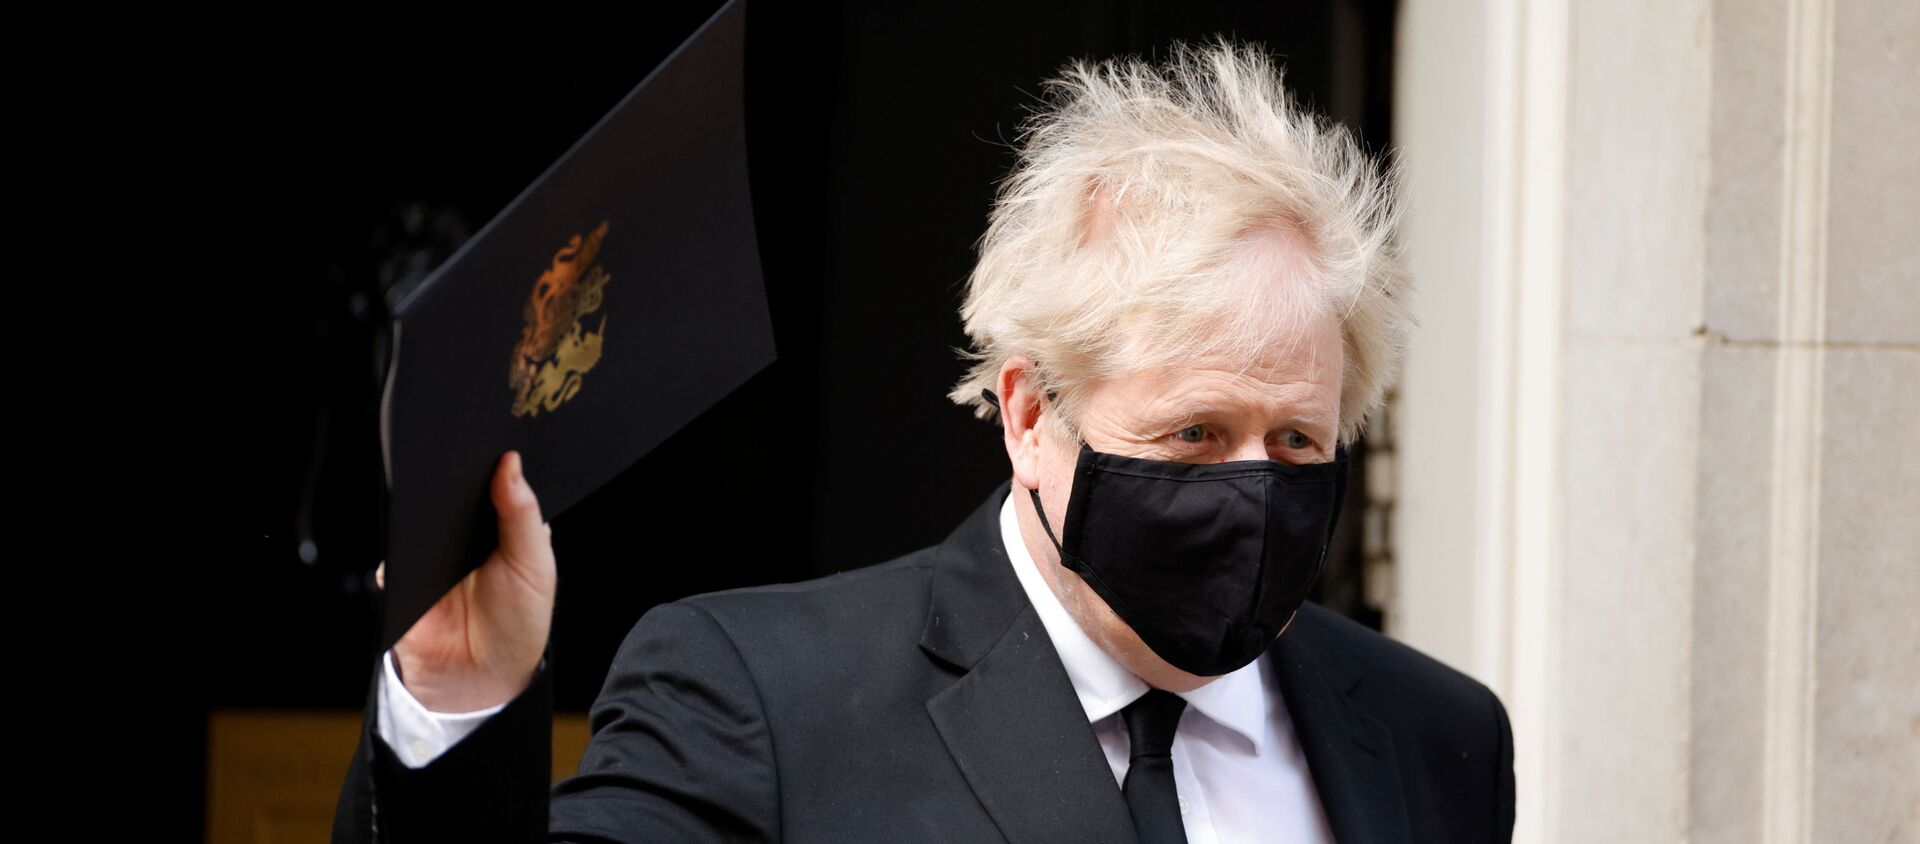 Britain's Prime Minister Boris Johnson leaves Downing Street in London, Britain, April 12, 2021 - Sputnik International, 1920, 23.04.2021